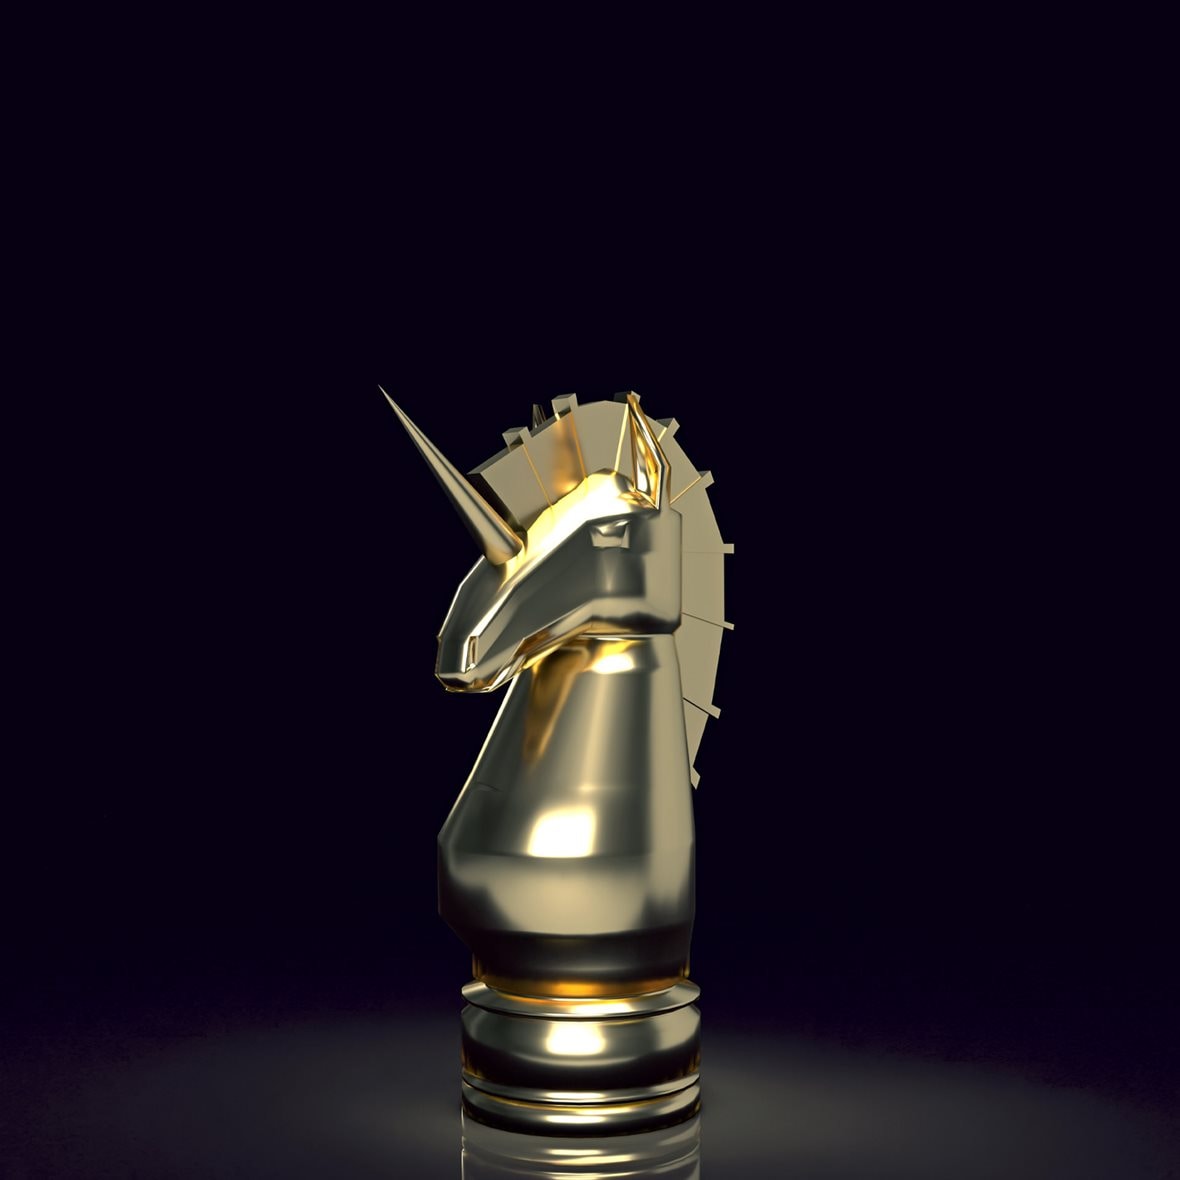 A gold unicorn chess piece